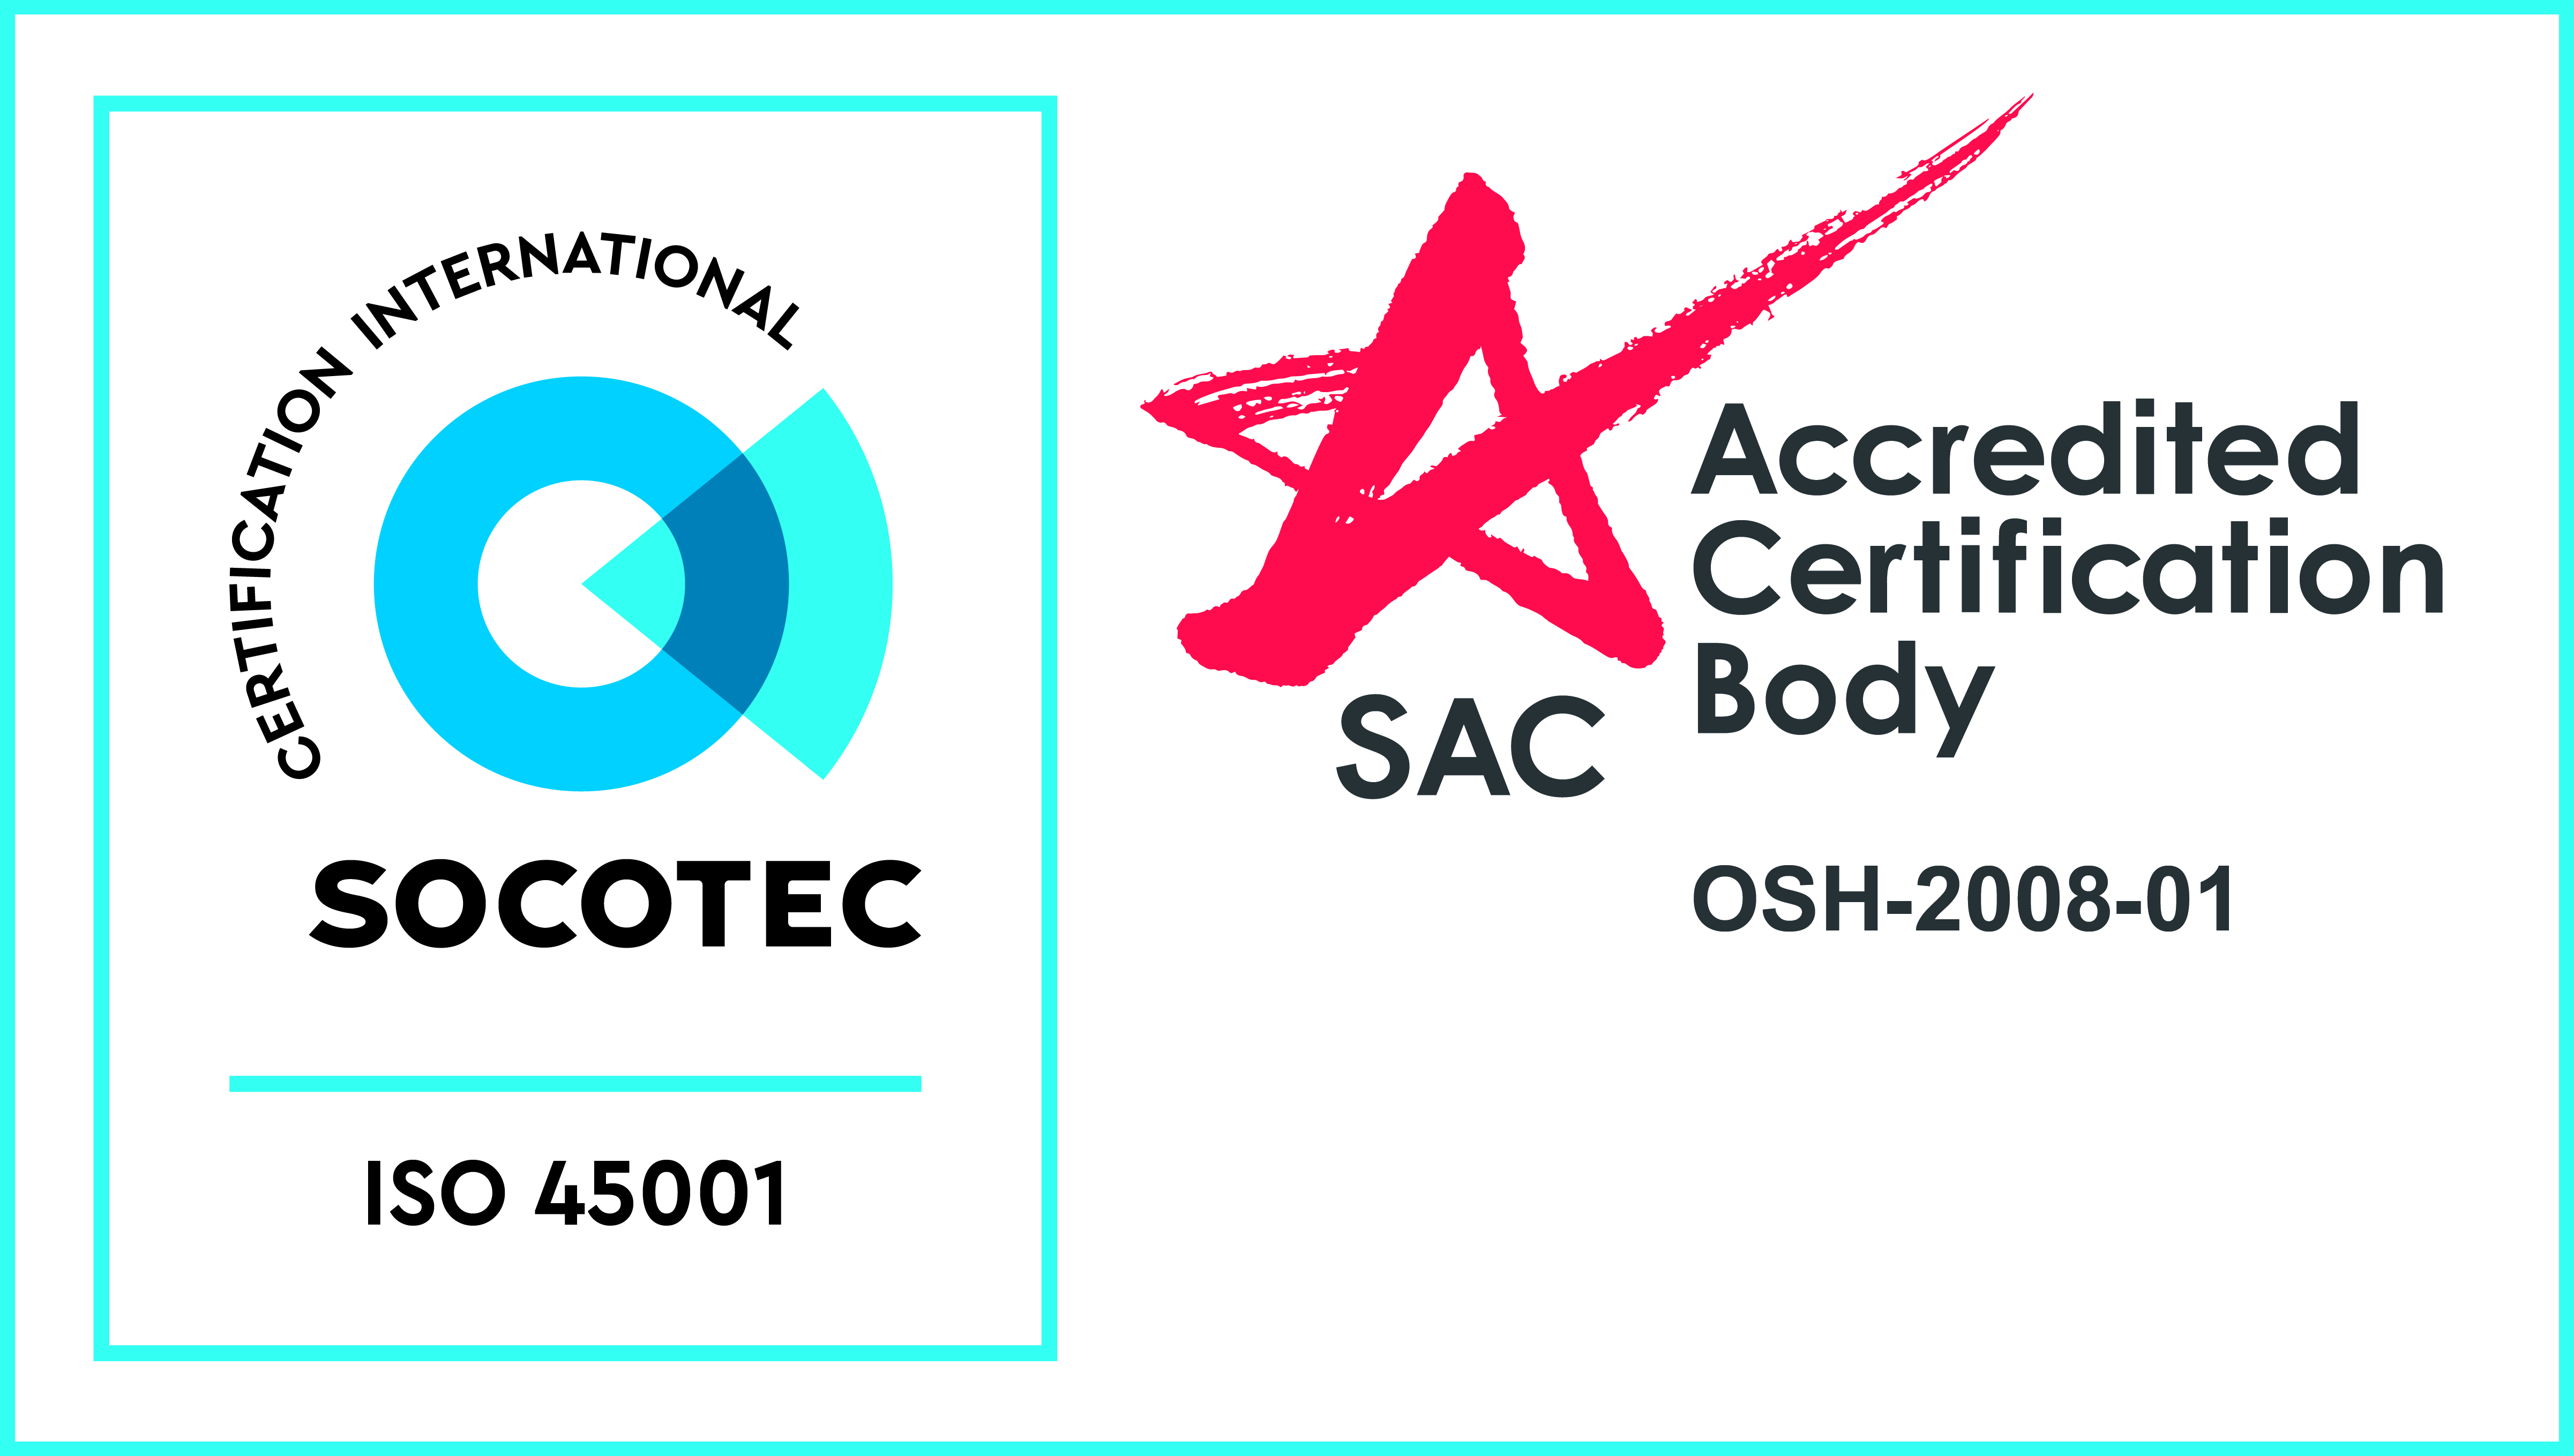 Certification International Socotec ISO 45001 (SAC)